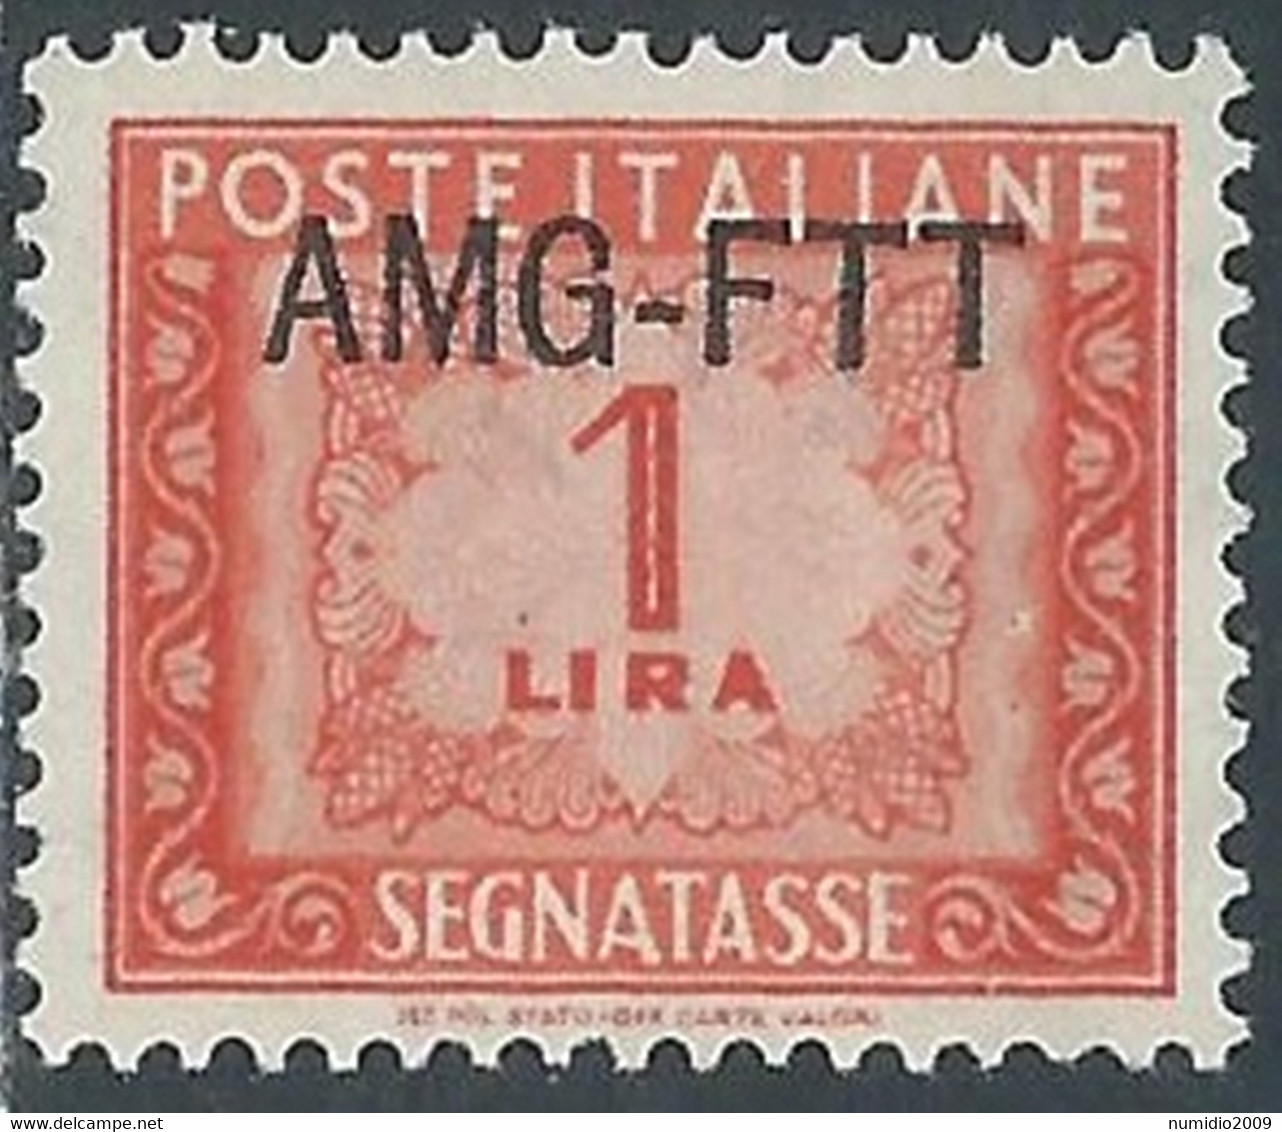 1949-54 TRIESTE A SEGNATASSE 1 LIRA MNH ** - RE8-4 - Taxe